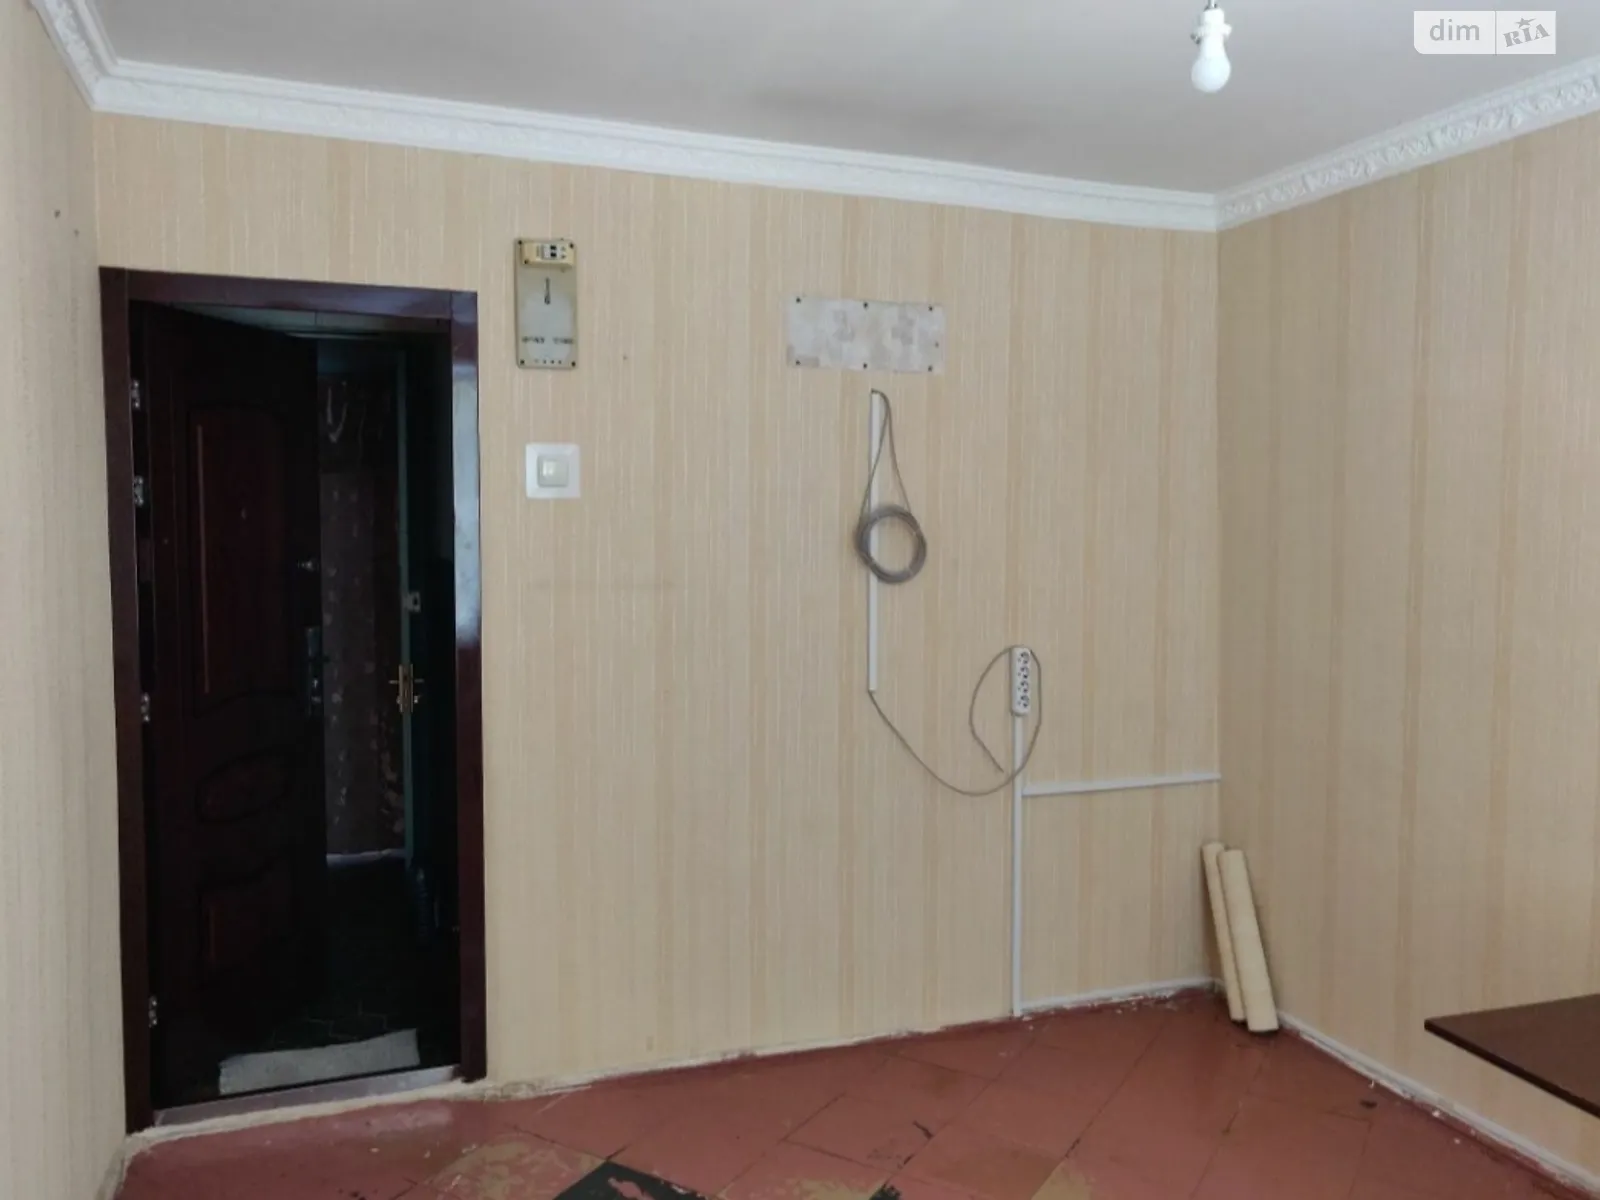 Продается комната 27 кв. м в Николаеве - фото 2